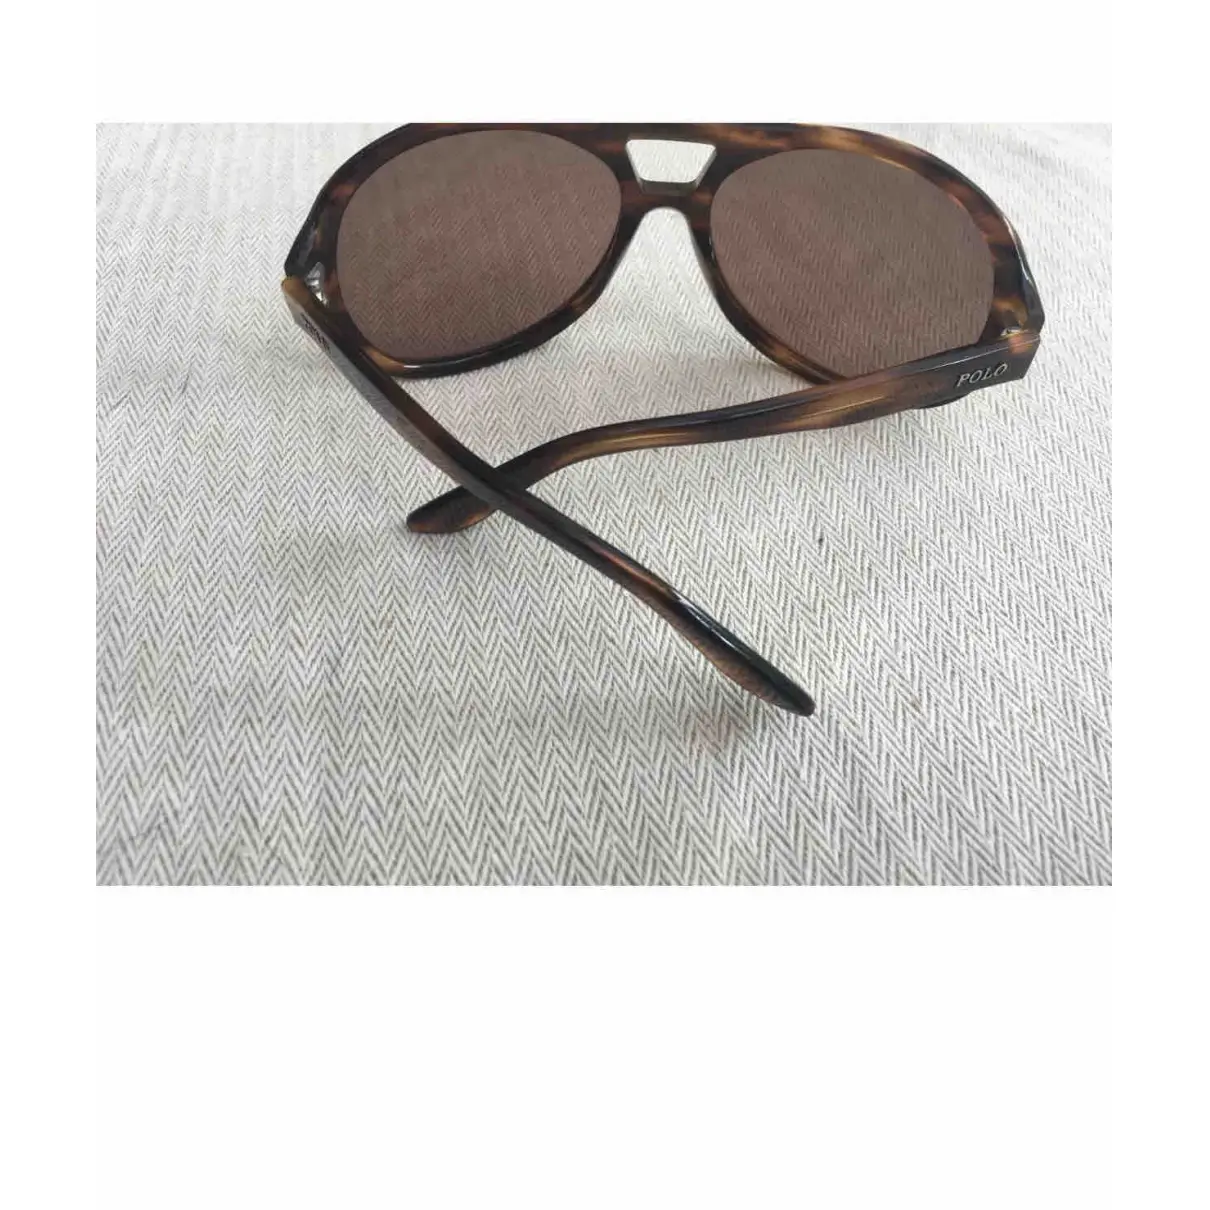 Luxury Polo Ralph Lauren Sunglasses Women